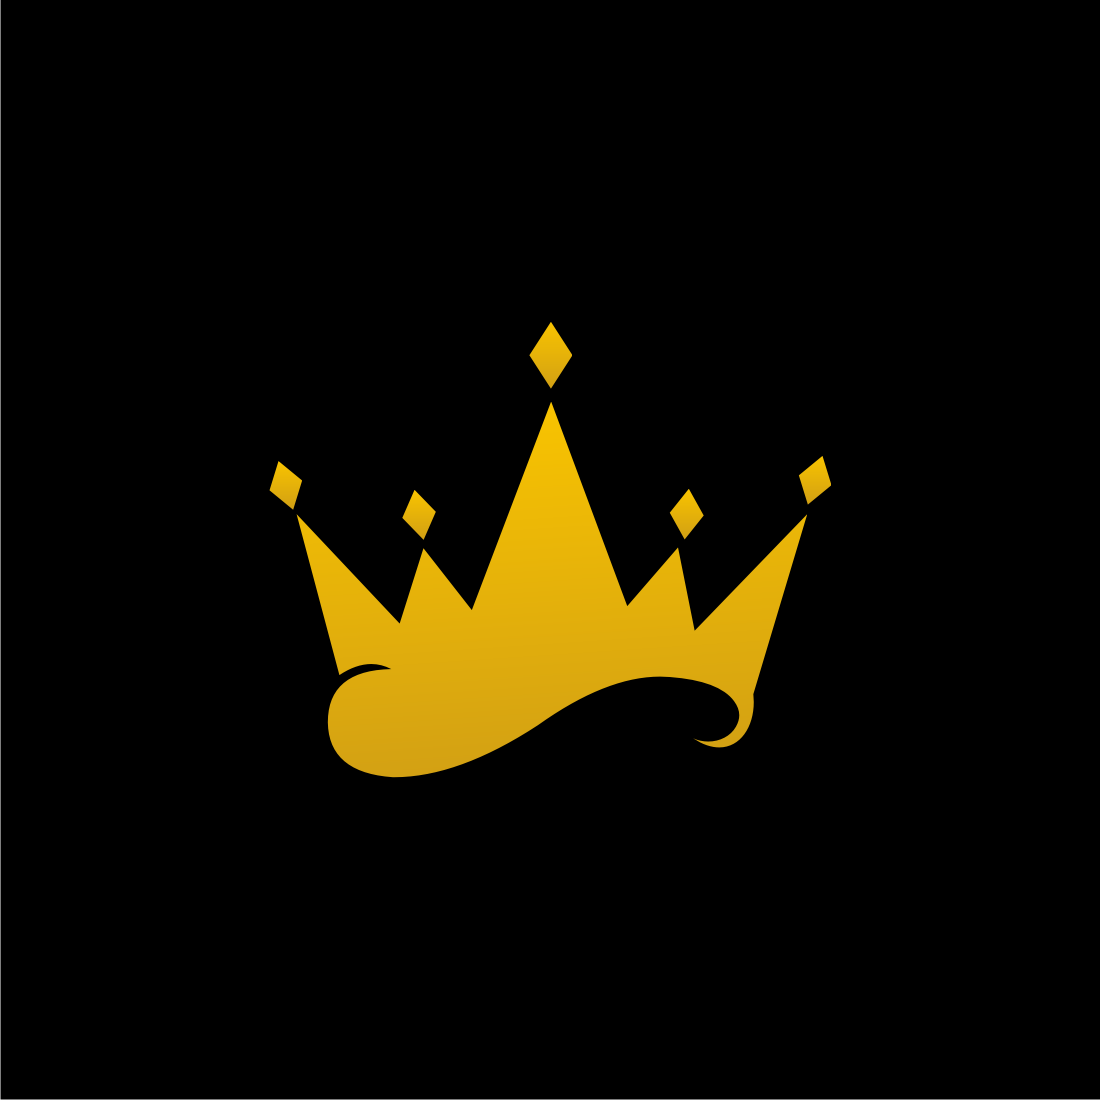 Letter o crown logo Royalty Free Vector Image - VectorStock